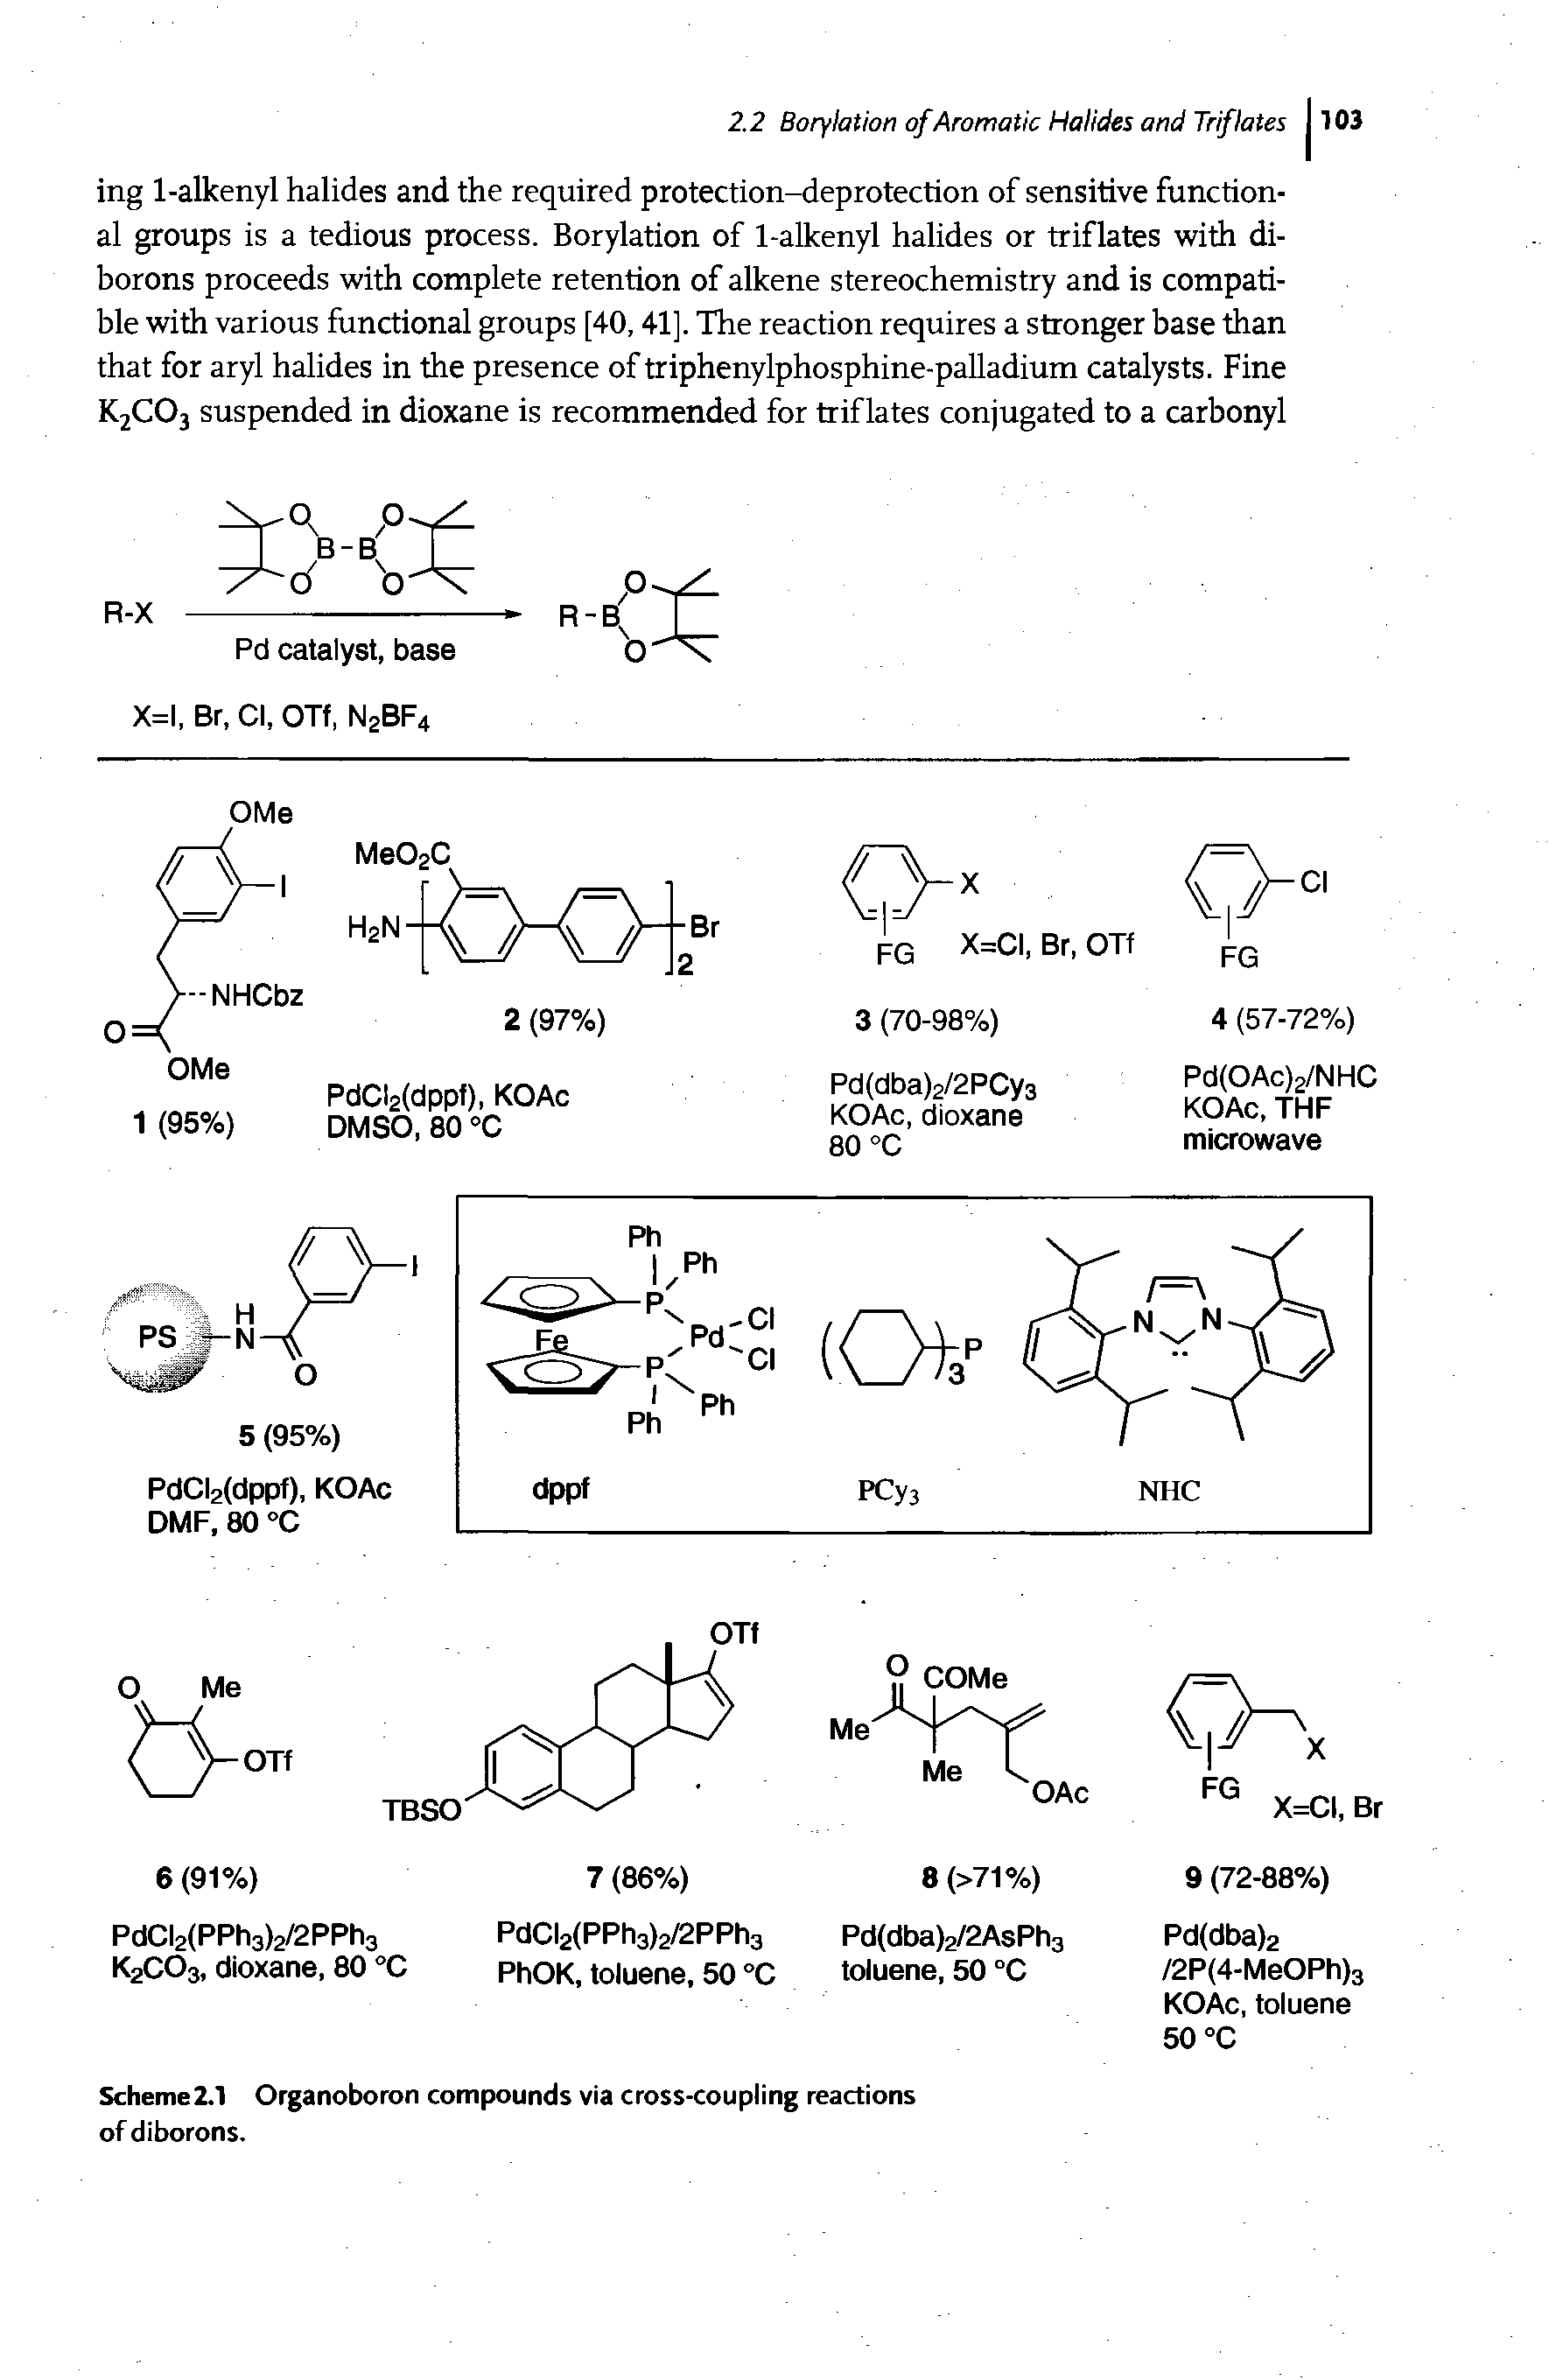 Scheme2.1 Organoboron compounds via cross-coupling reactions of diborons.